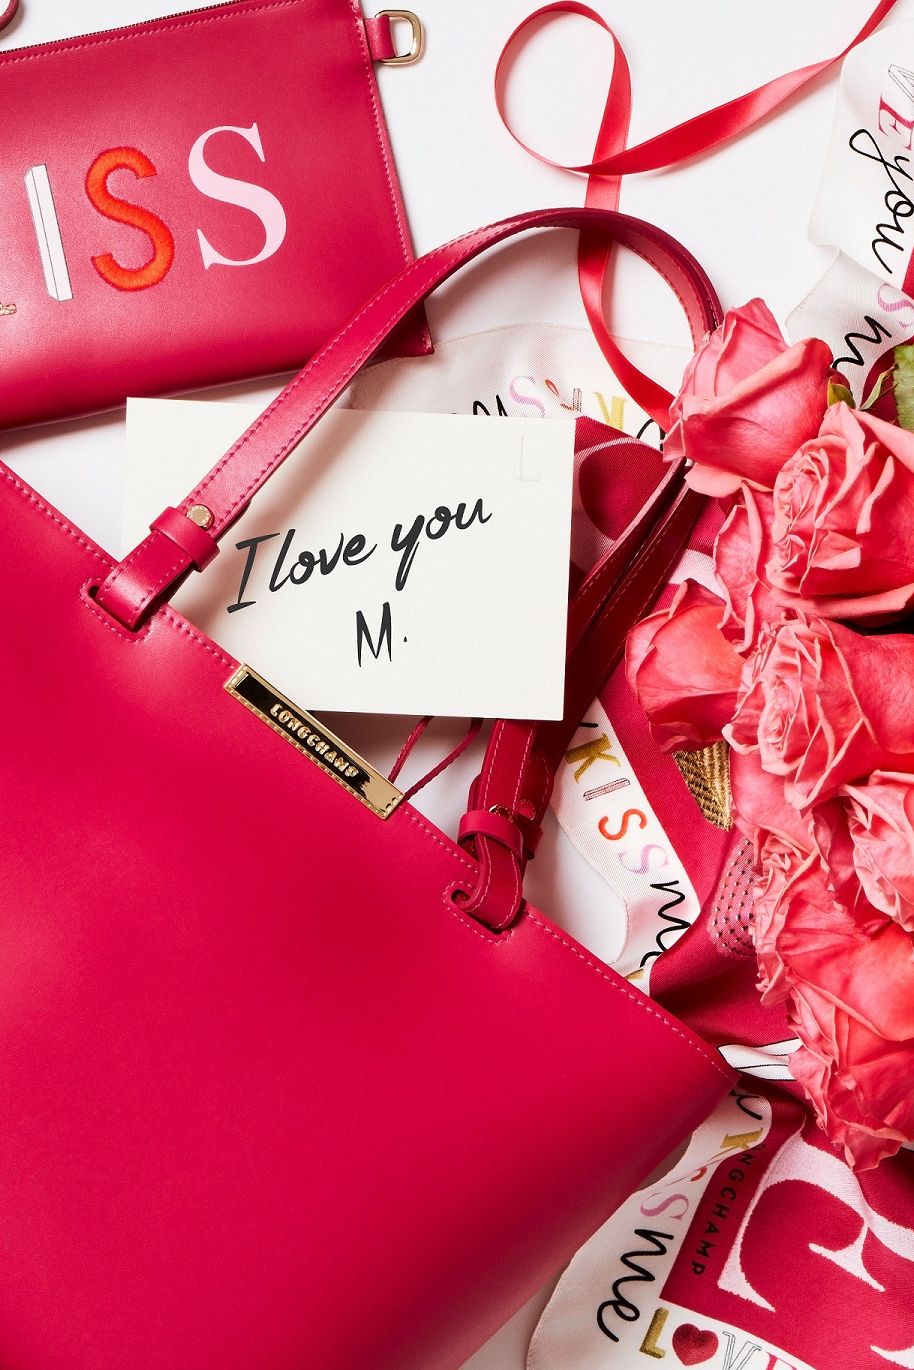 Red, Ribbon, Font, Present, Bag, Shoulder bag, Party favor, Gift wrapping, Wedding favors, Valentine's day, 